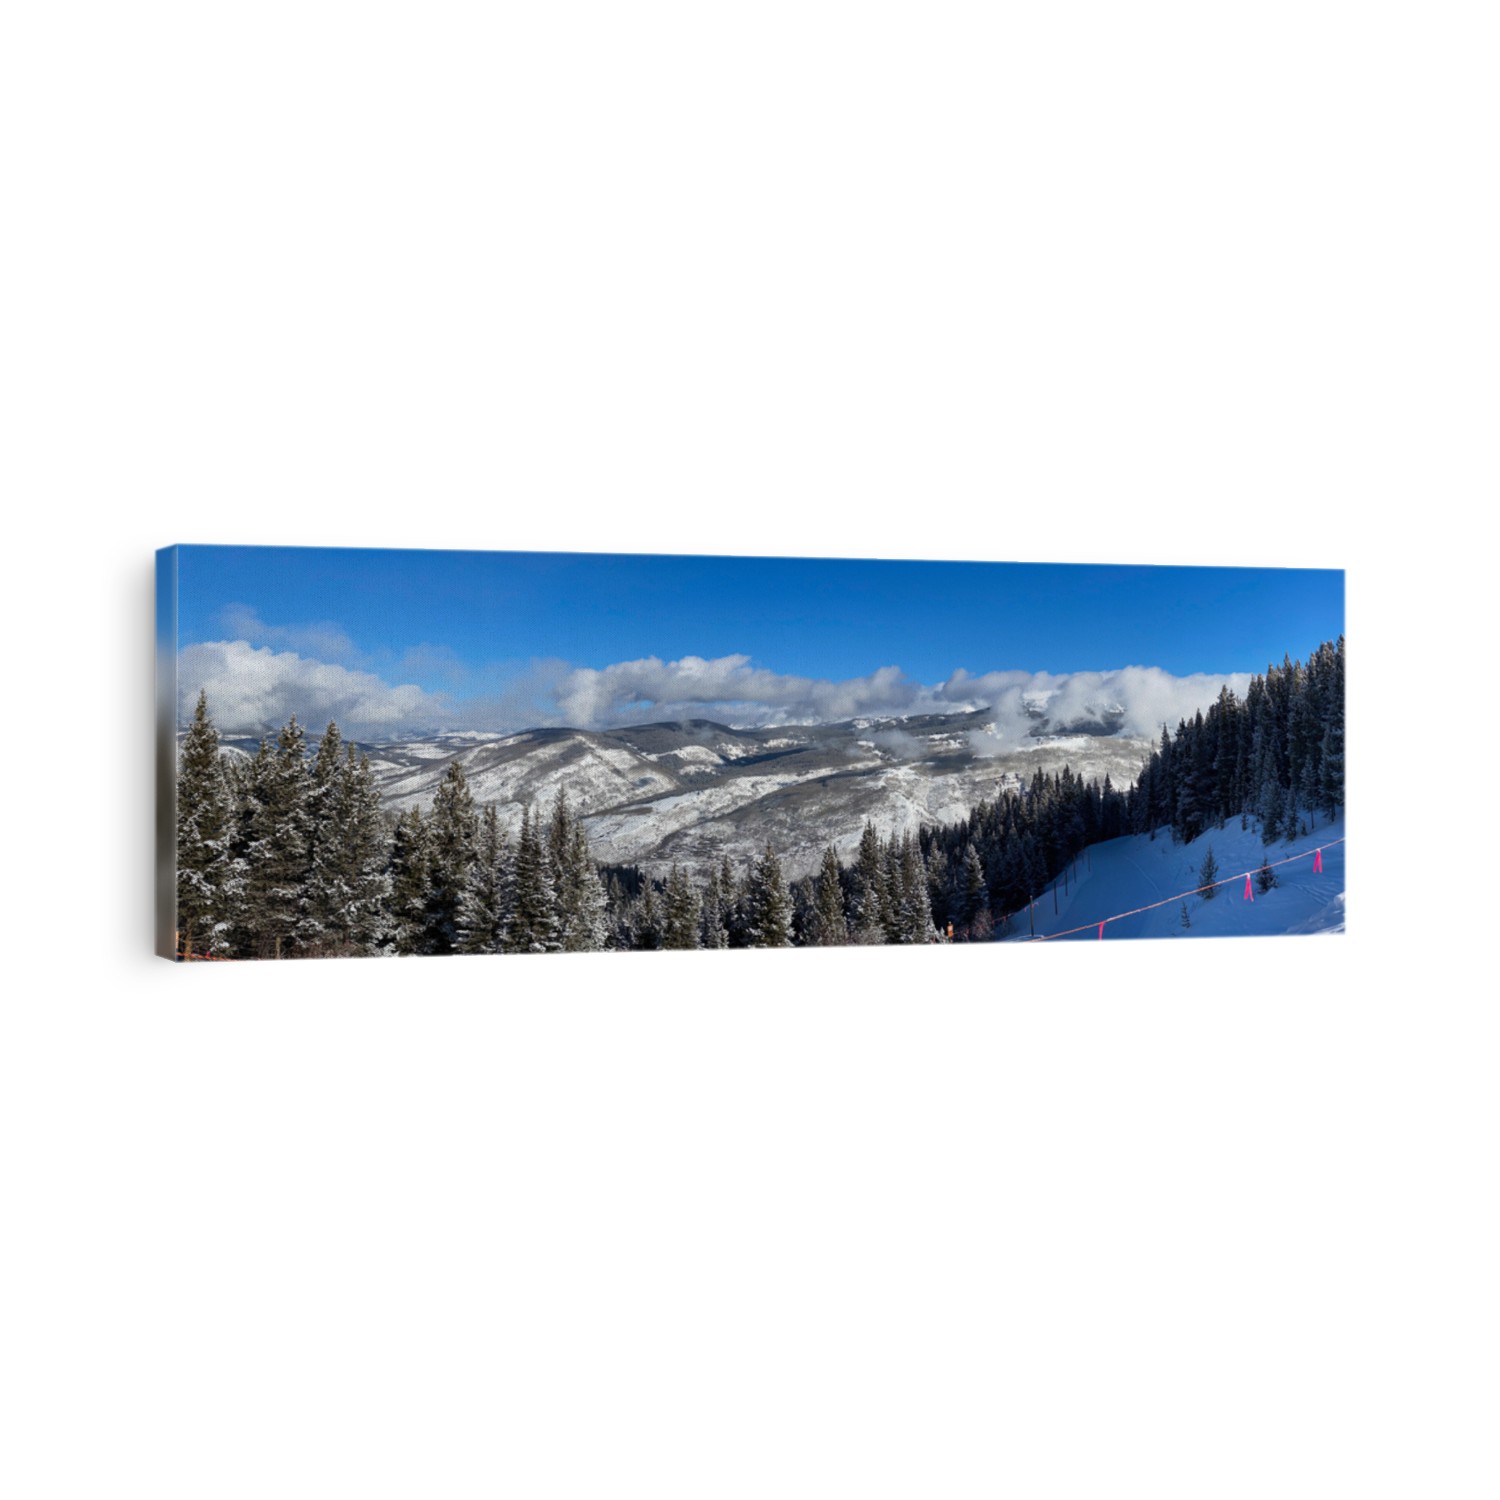 Panoramic view at vail Ski resort, CO